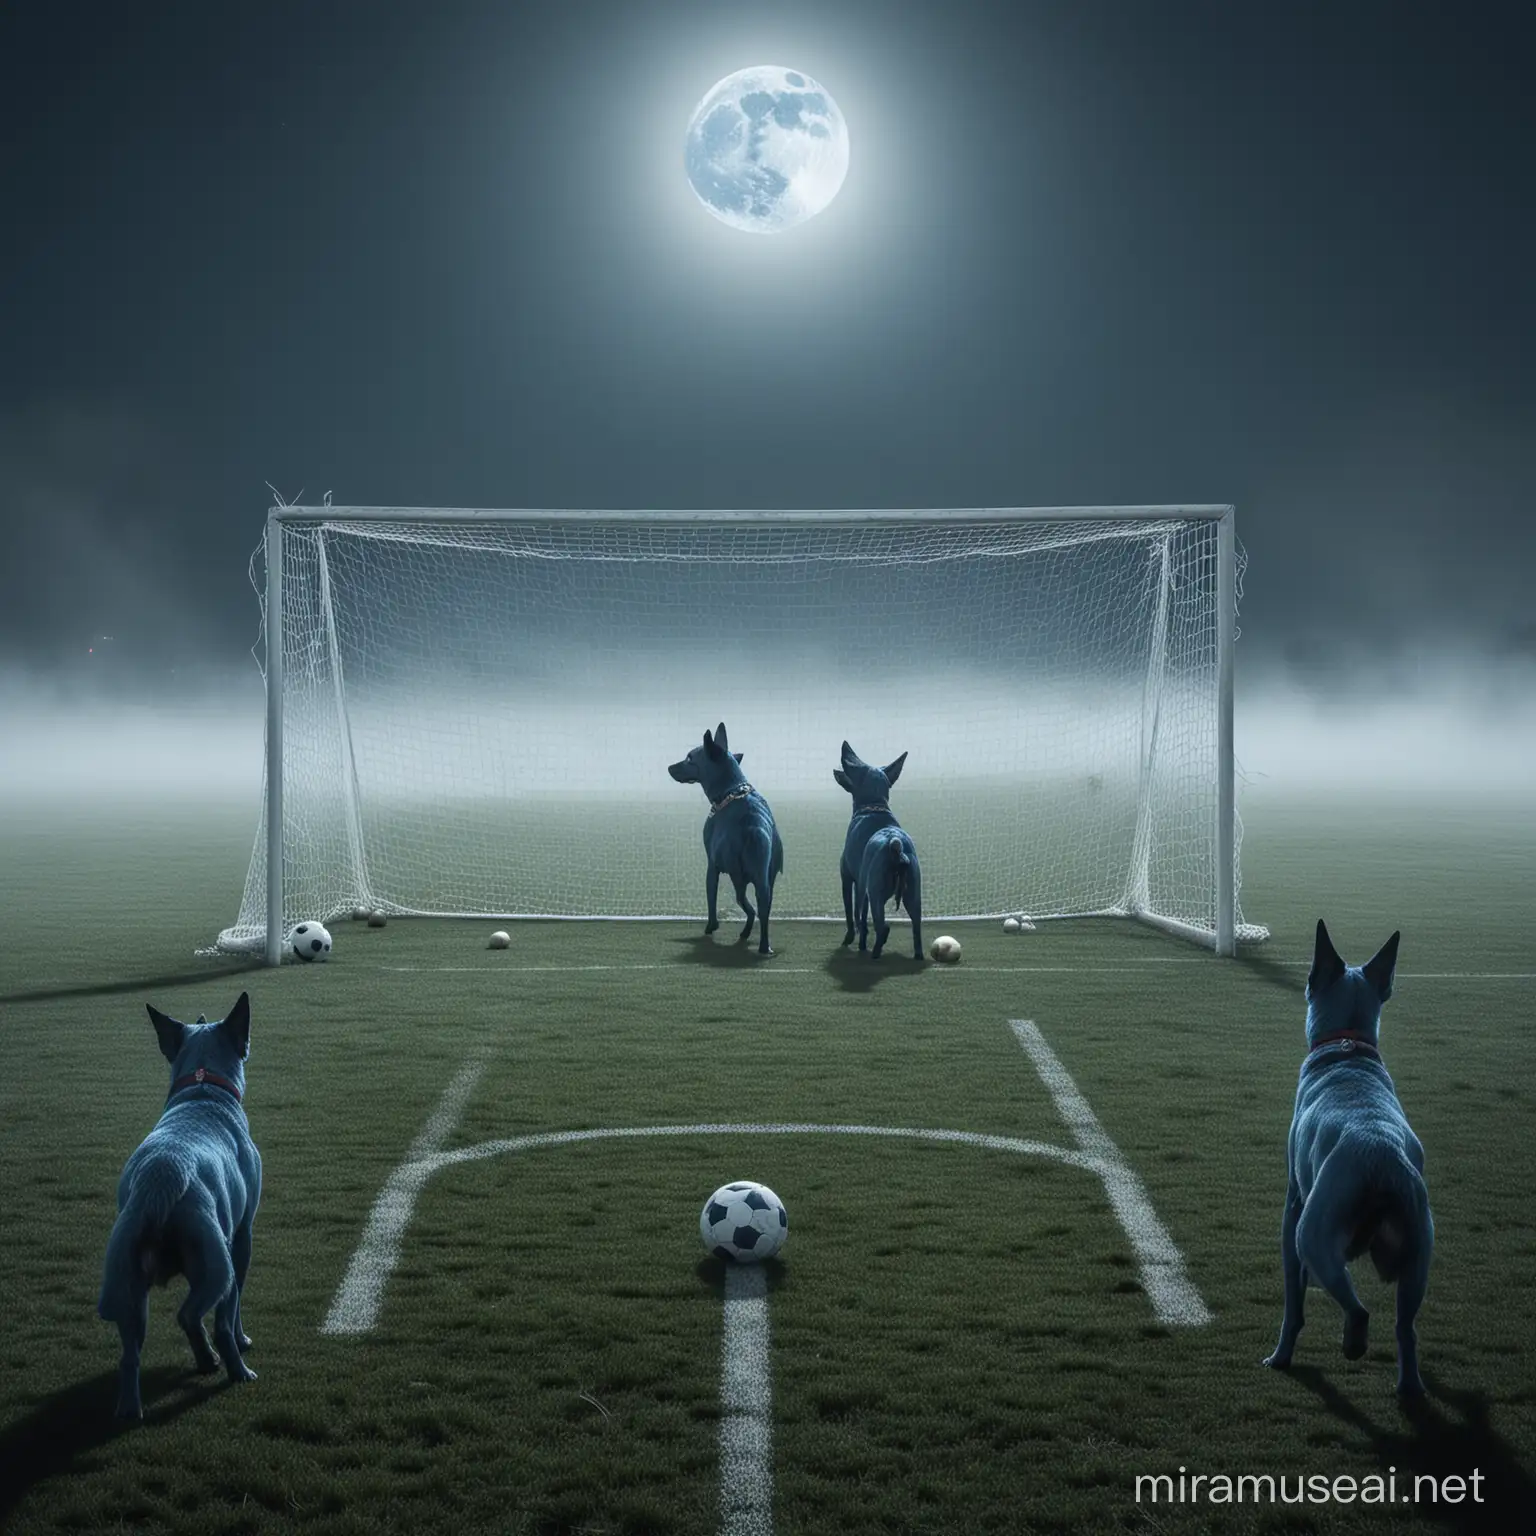 Misty Night Football Showdown with Blue Dogs